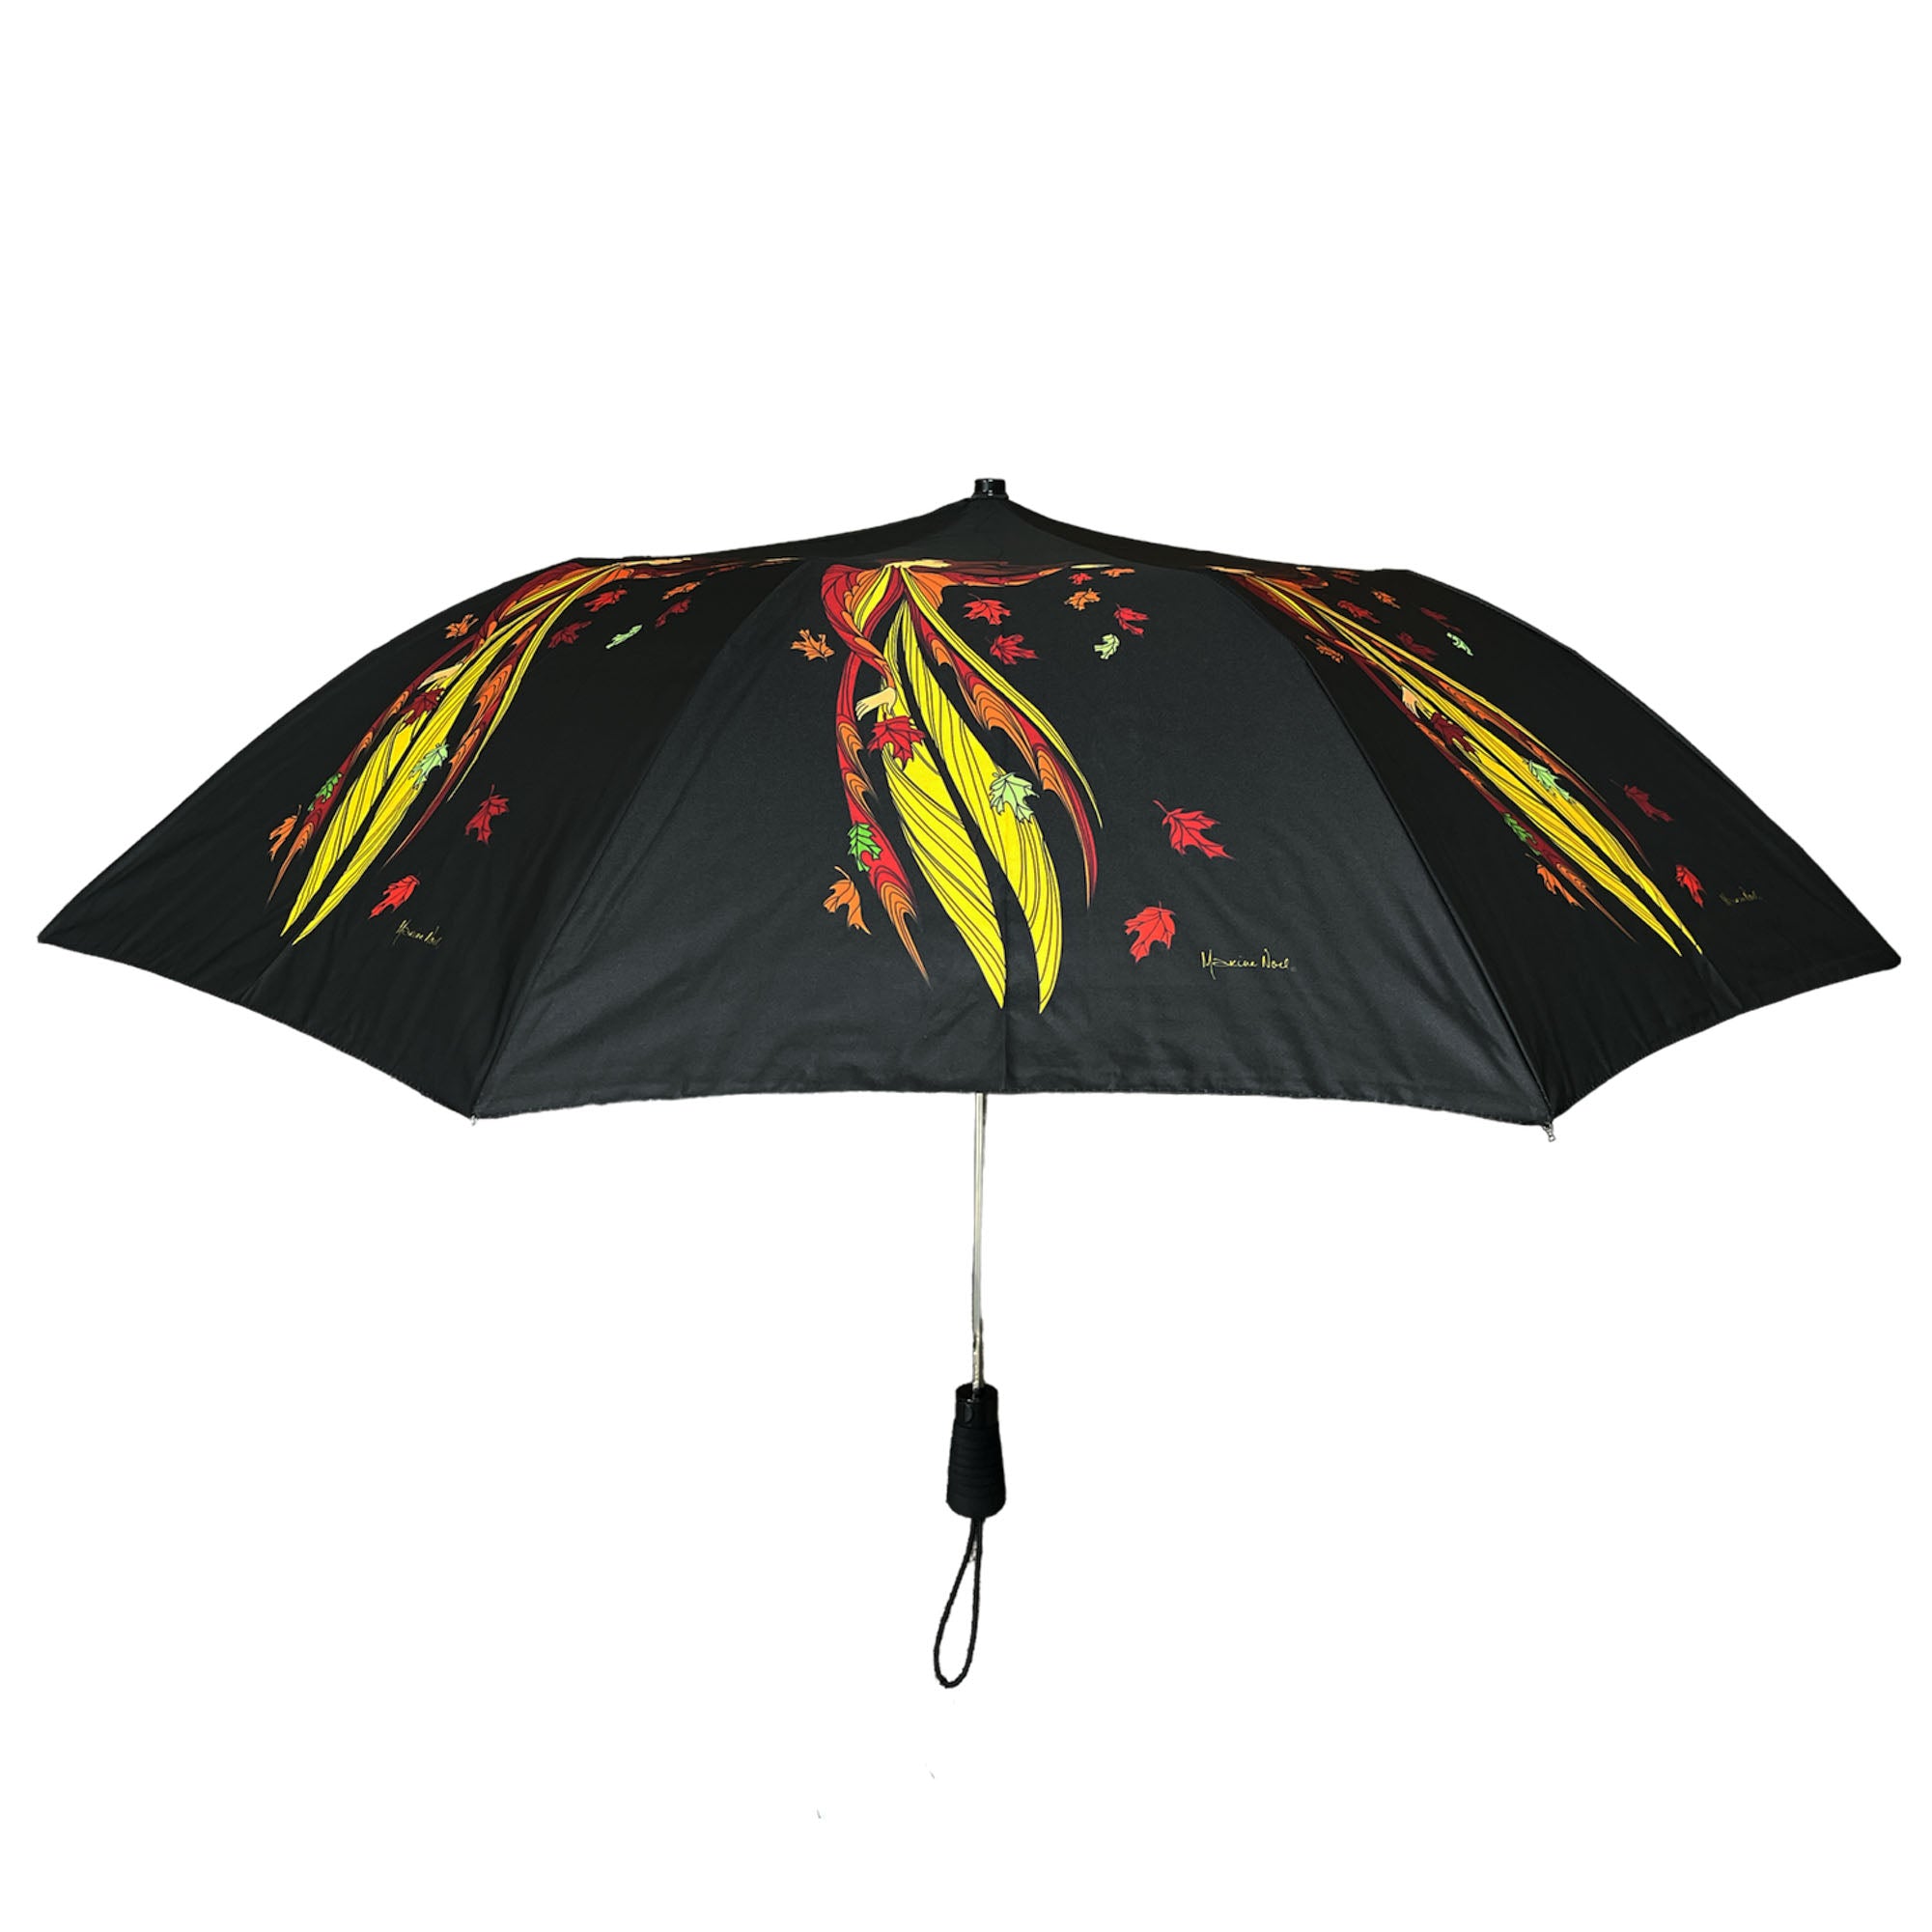 Maxine Noel Leaf Dancer Artist Collapsible Umbrella